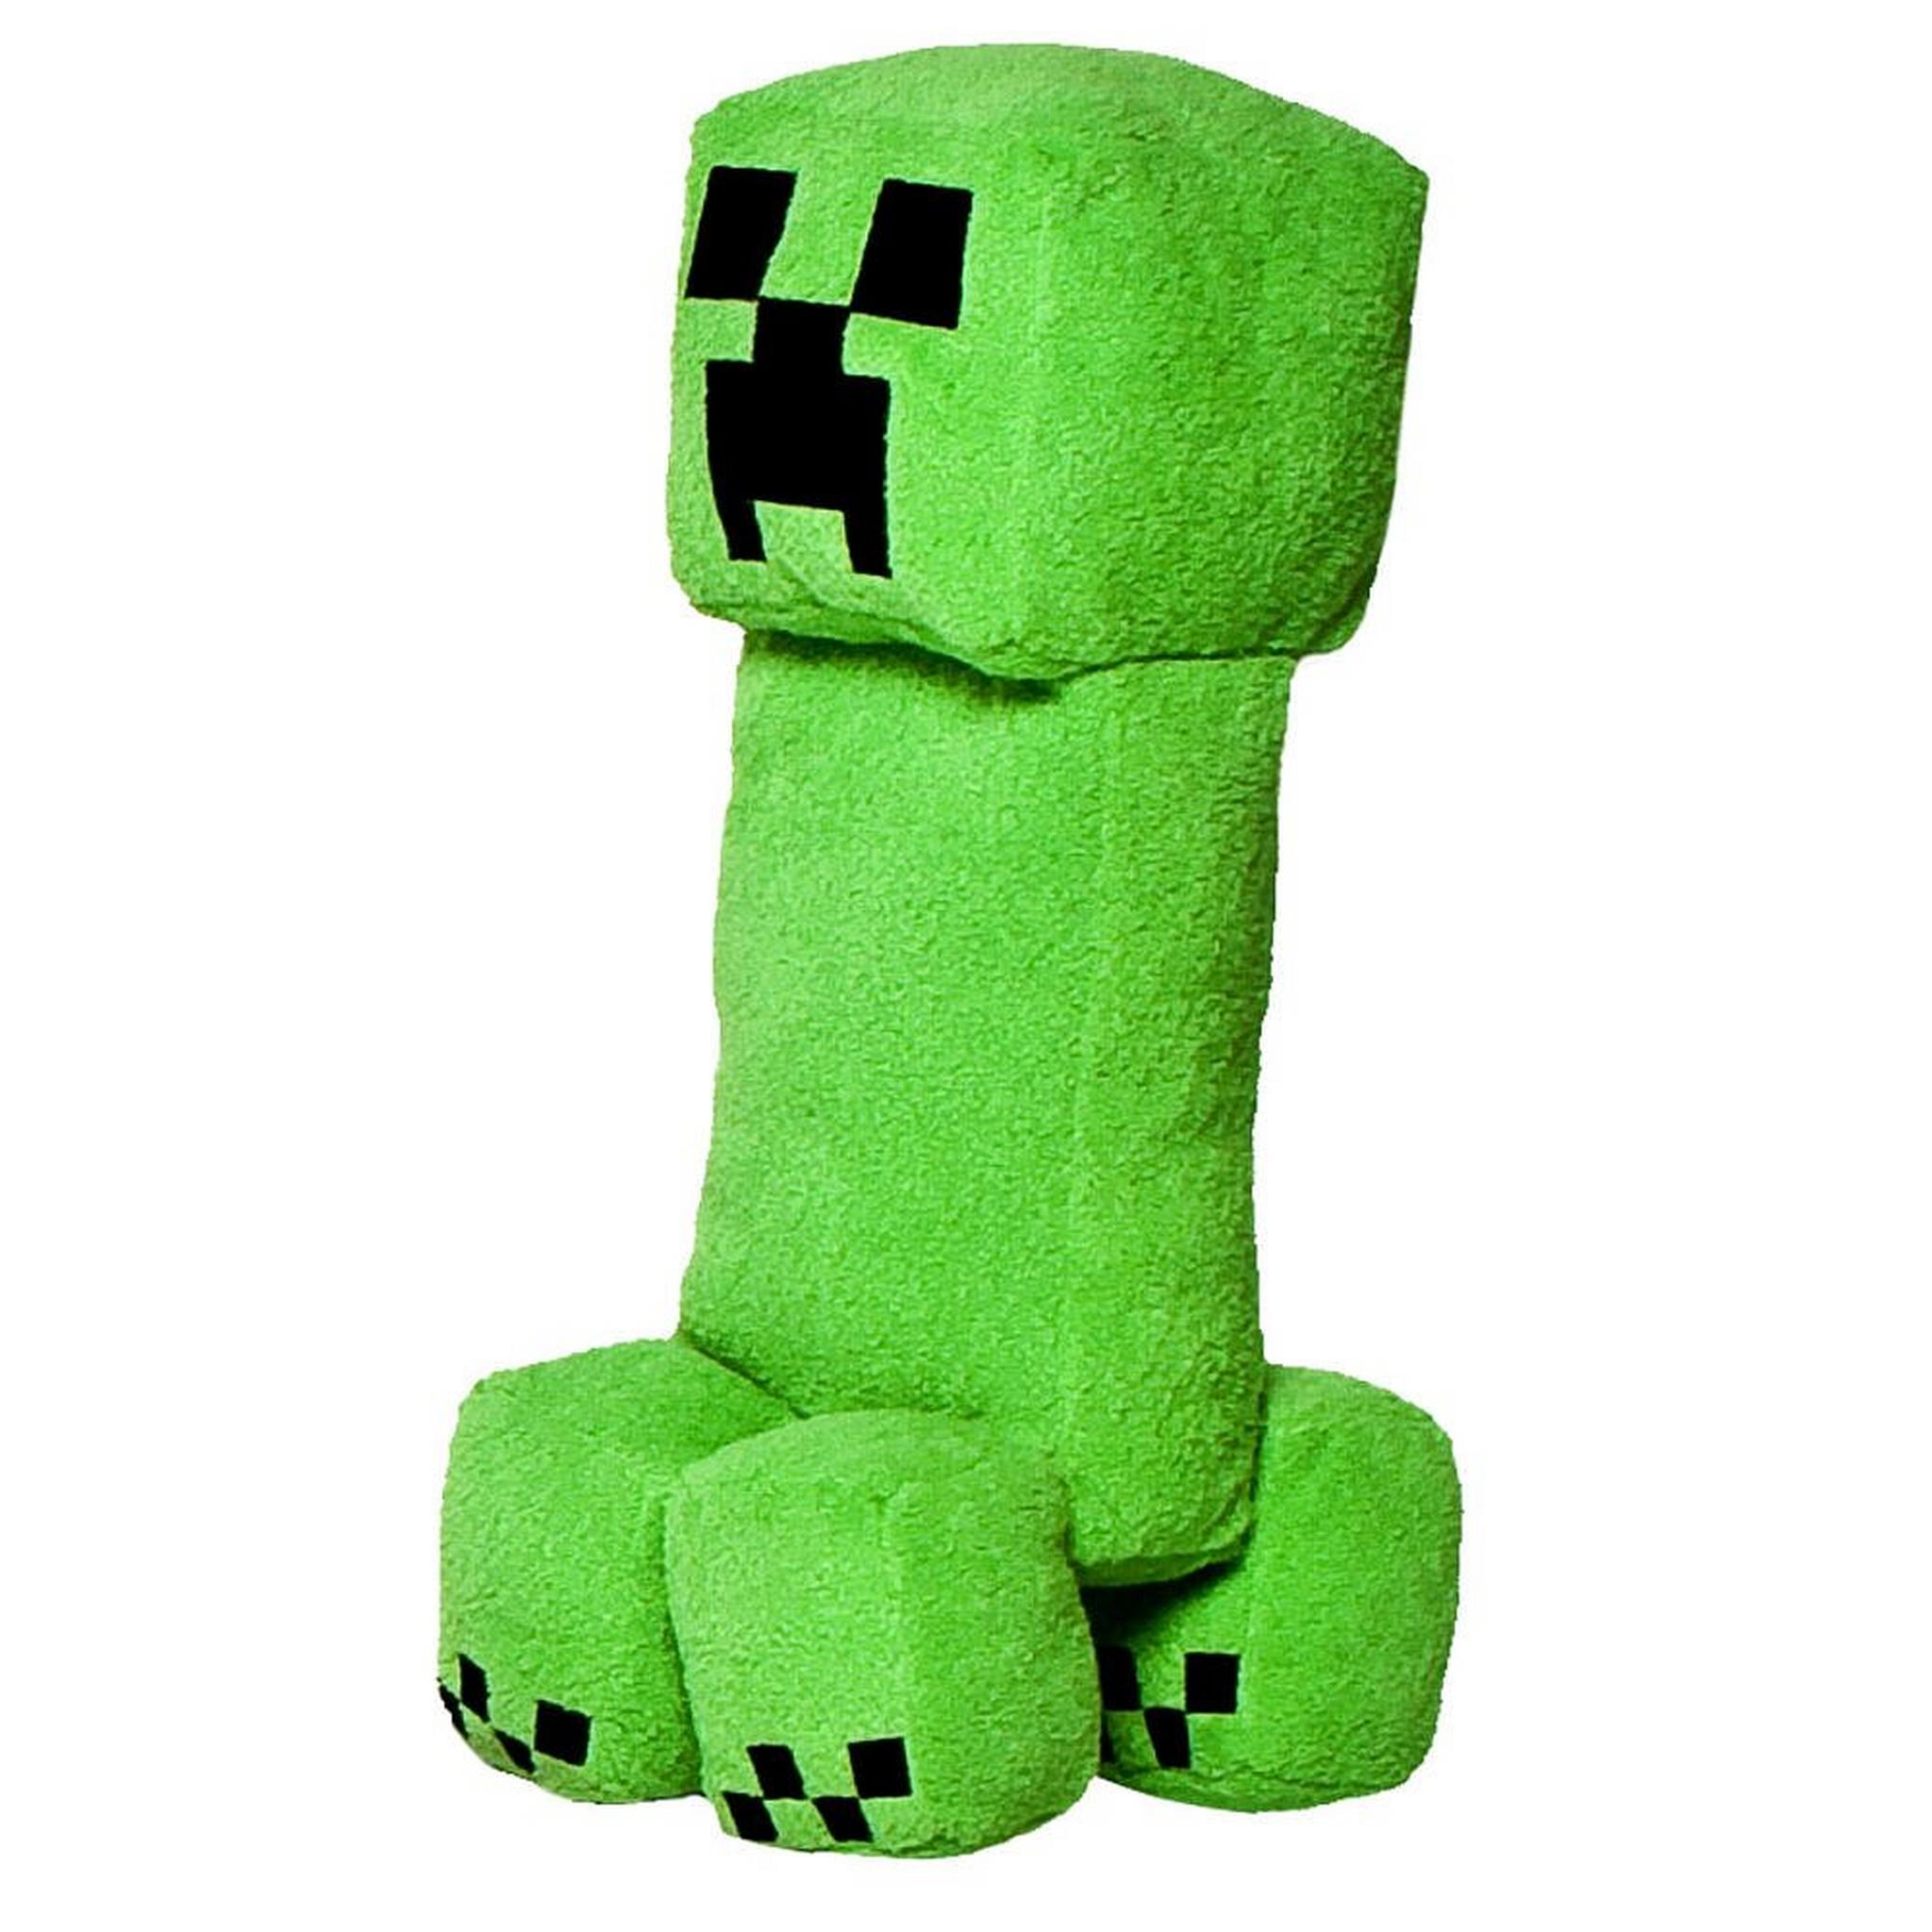 Minecraft: Creeper Plush Figure - Green